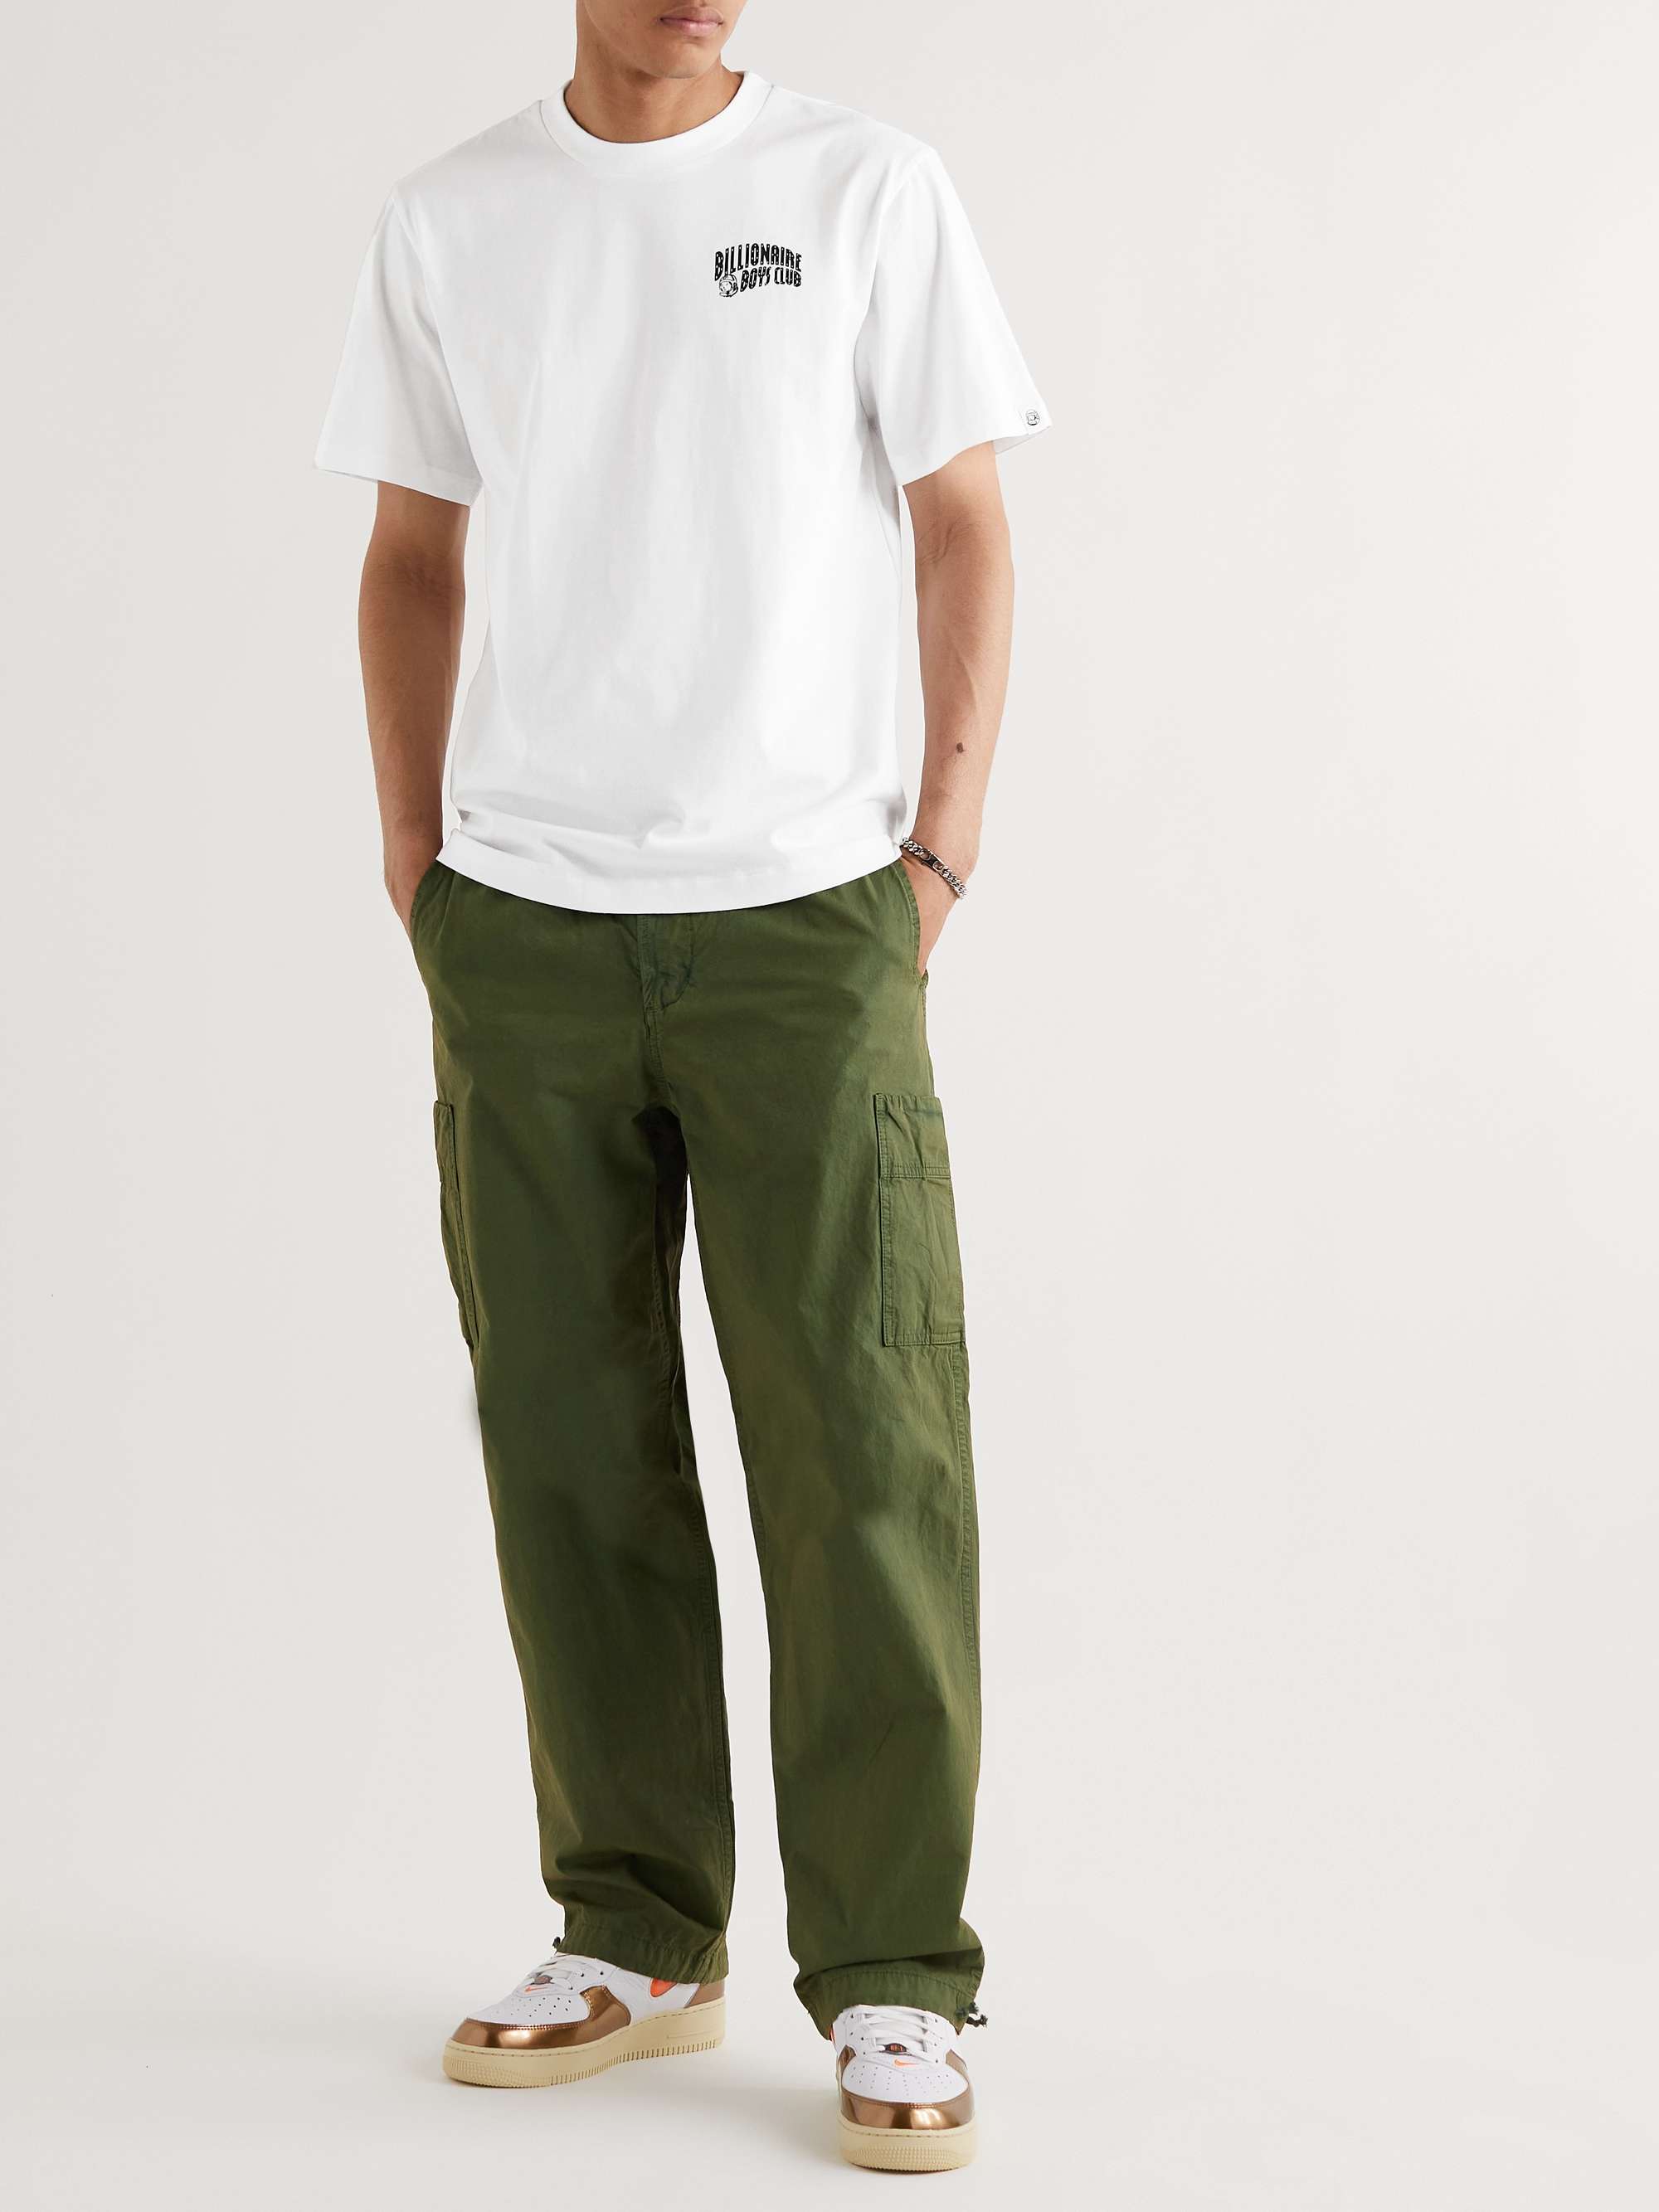 BILLIONAIRE BOYS CLUB Logo-Print Cotton-Jersey T-Shirt for Men | MR PORTER